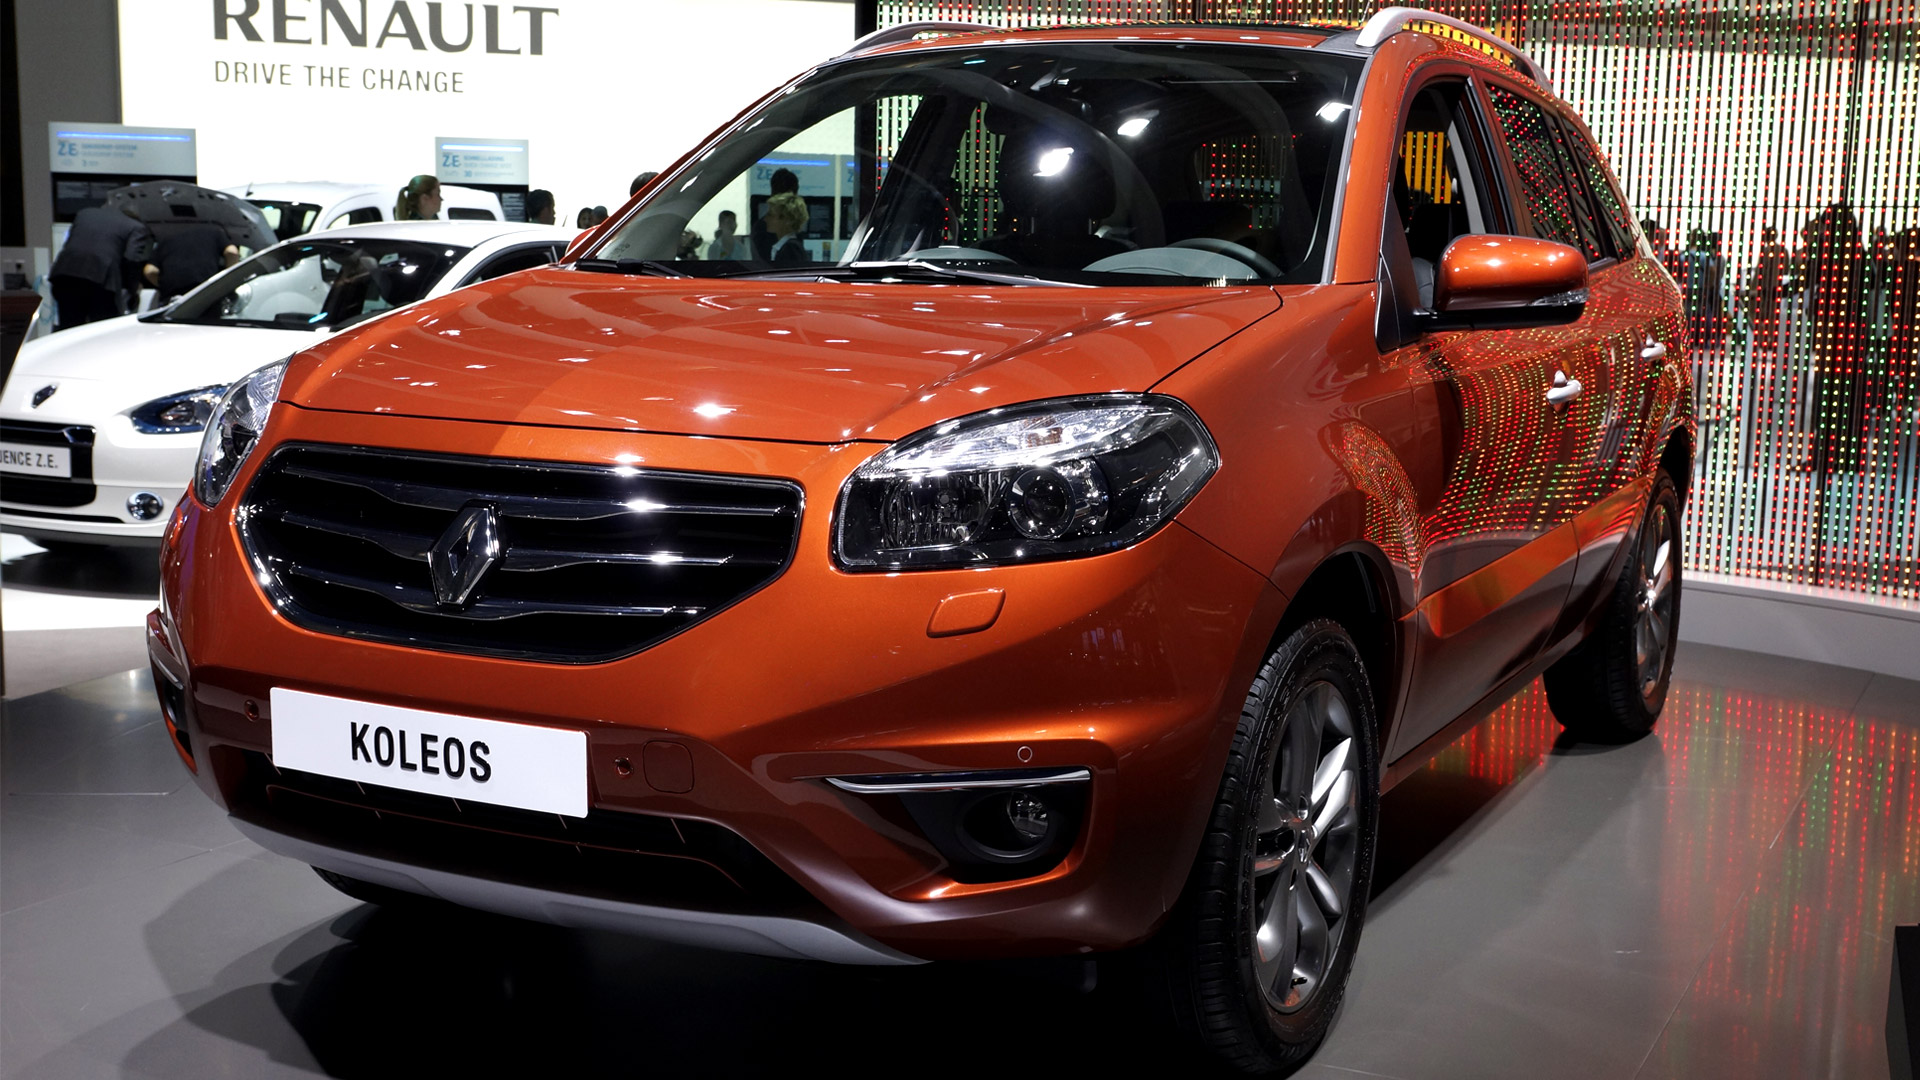 2014 Renault Koleos facelift: Review	